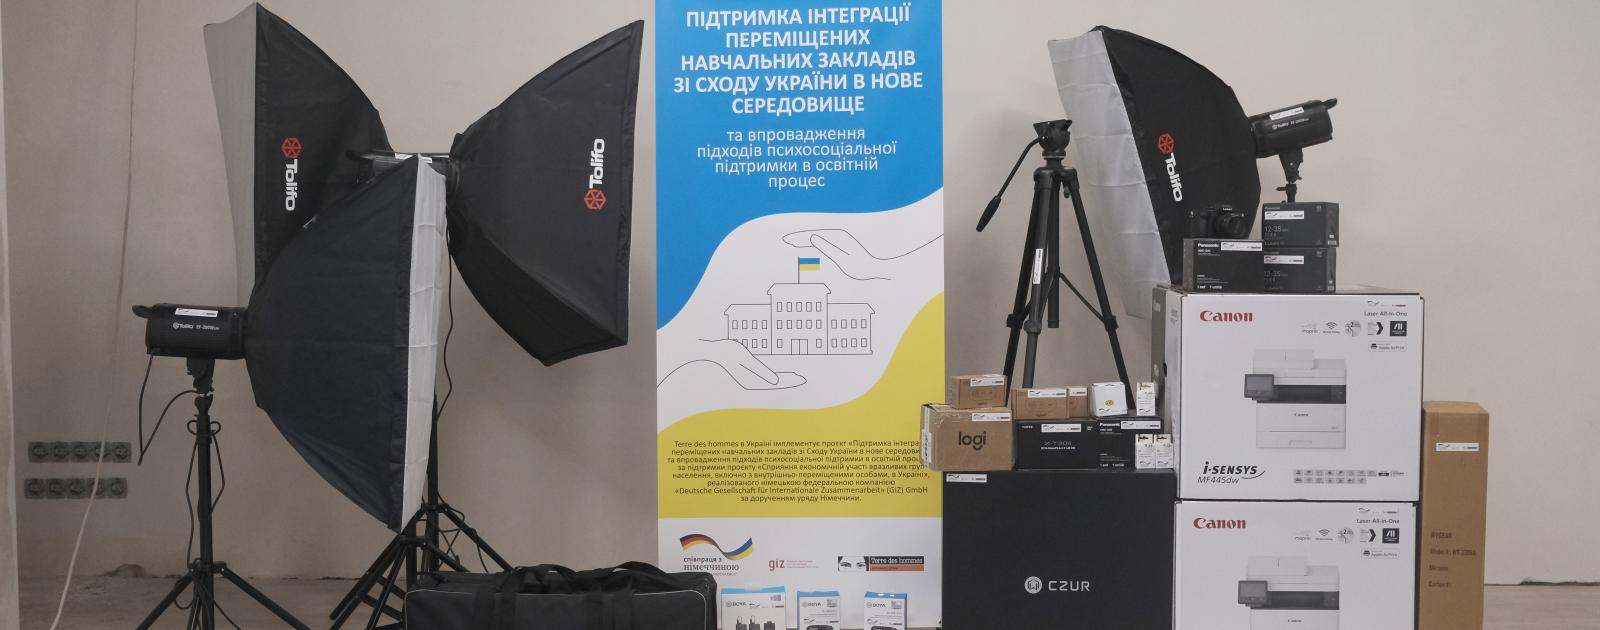 ICT equipment for Mariupol university